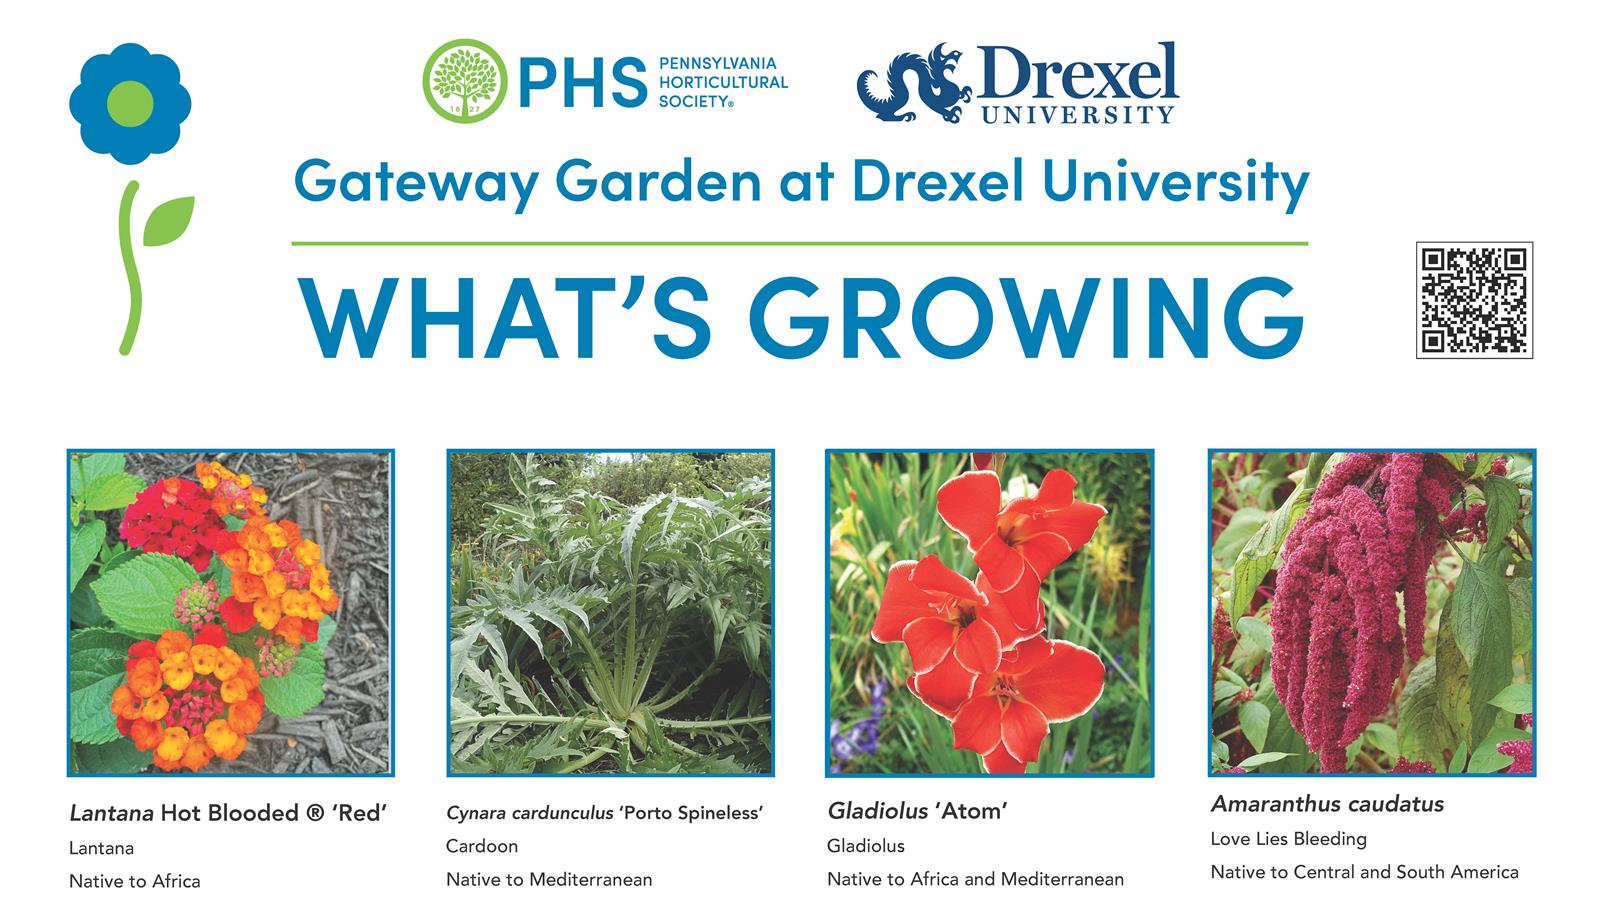 PHS list of Plants in the Gateway Garden